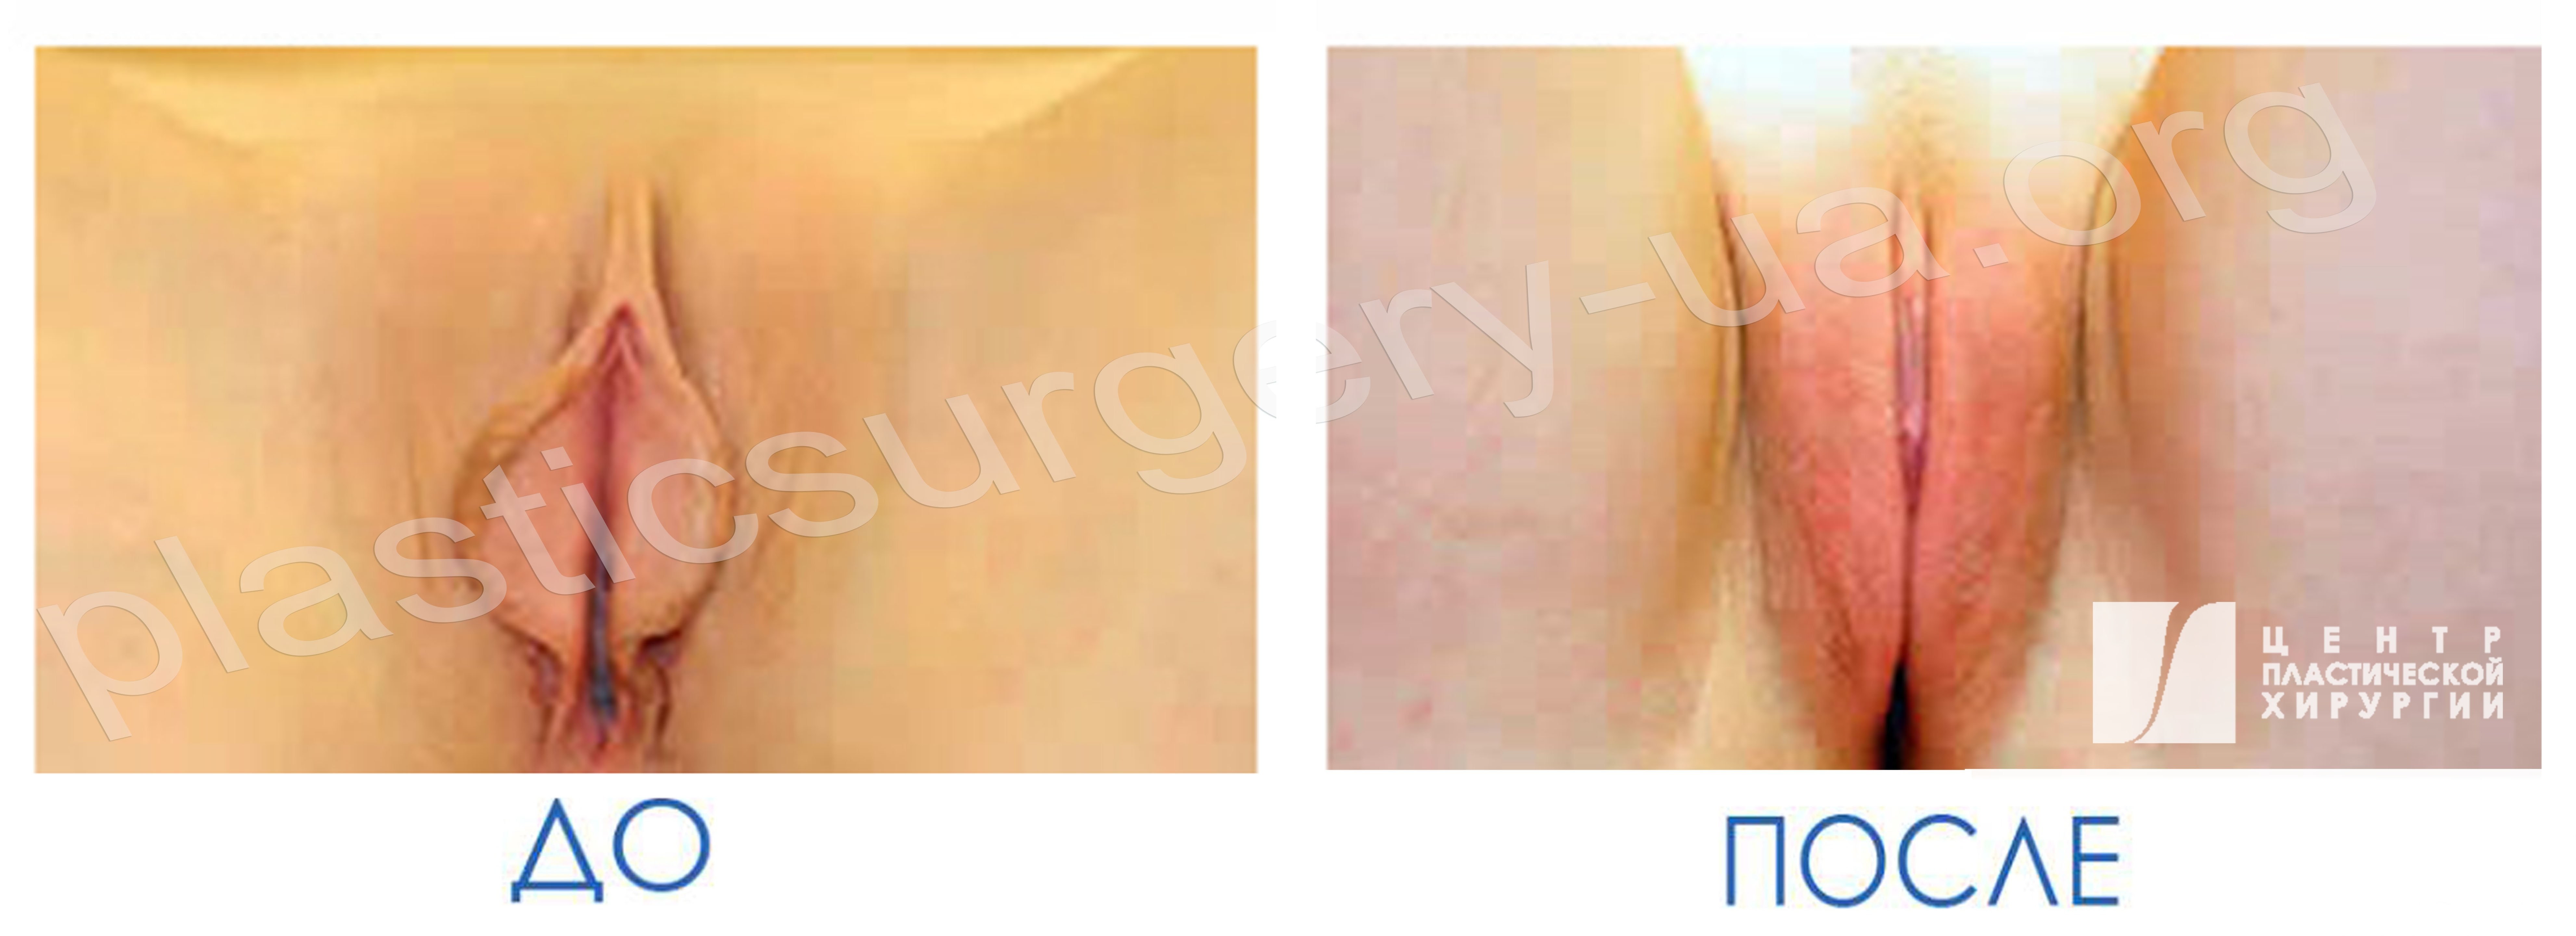 голая на операции фото до и после фото 82